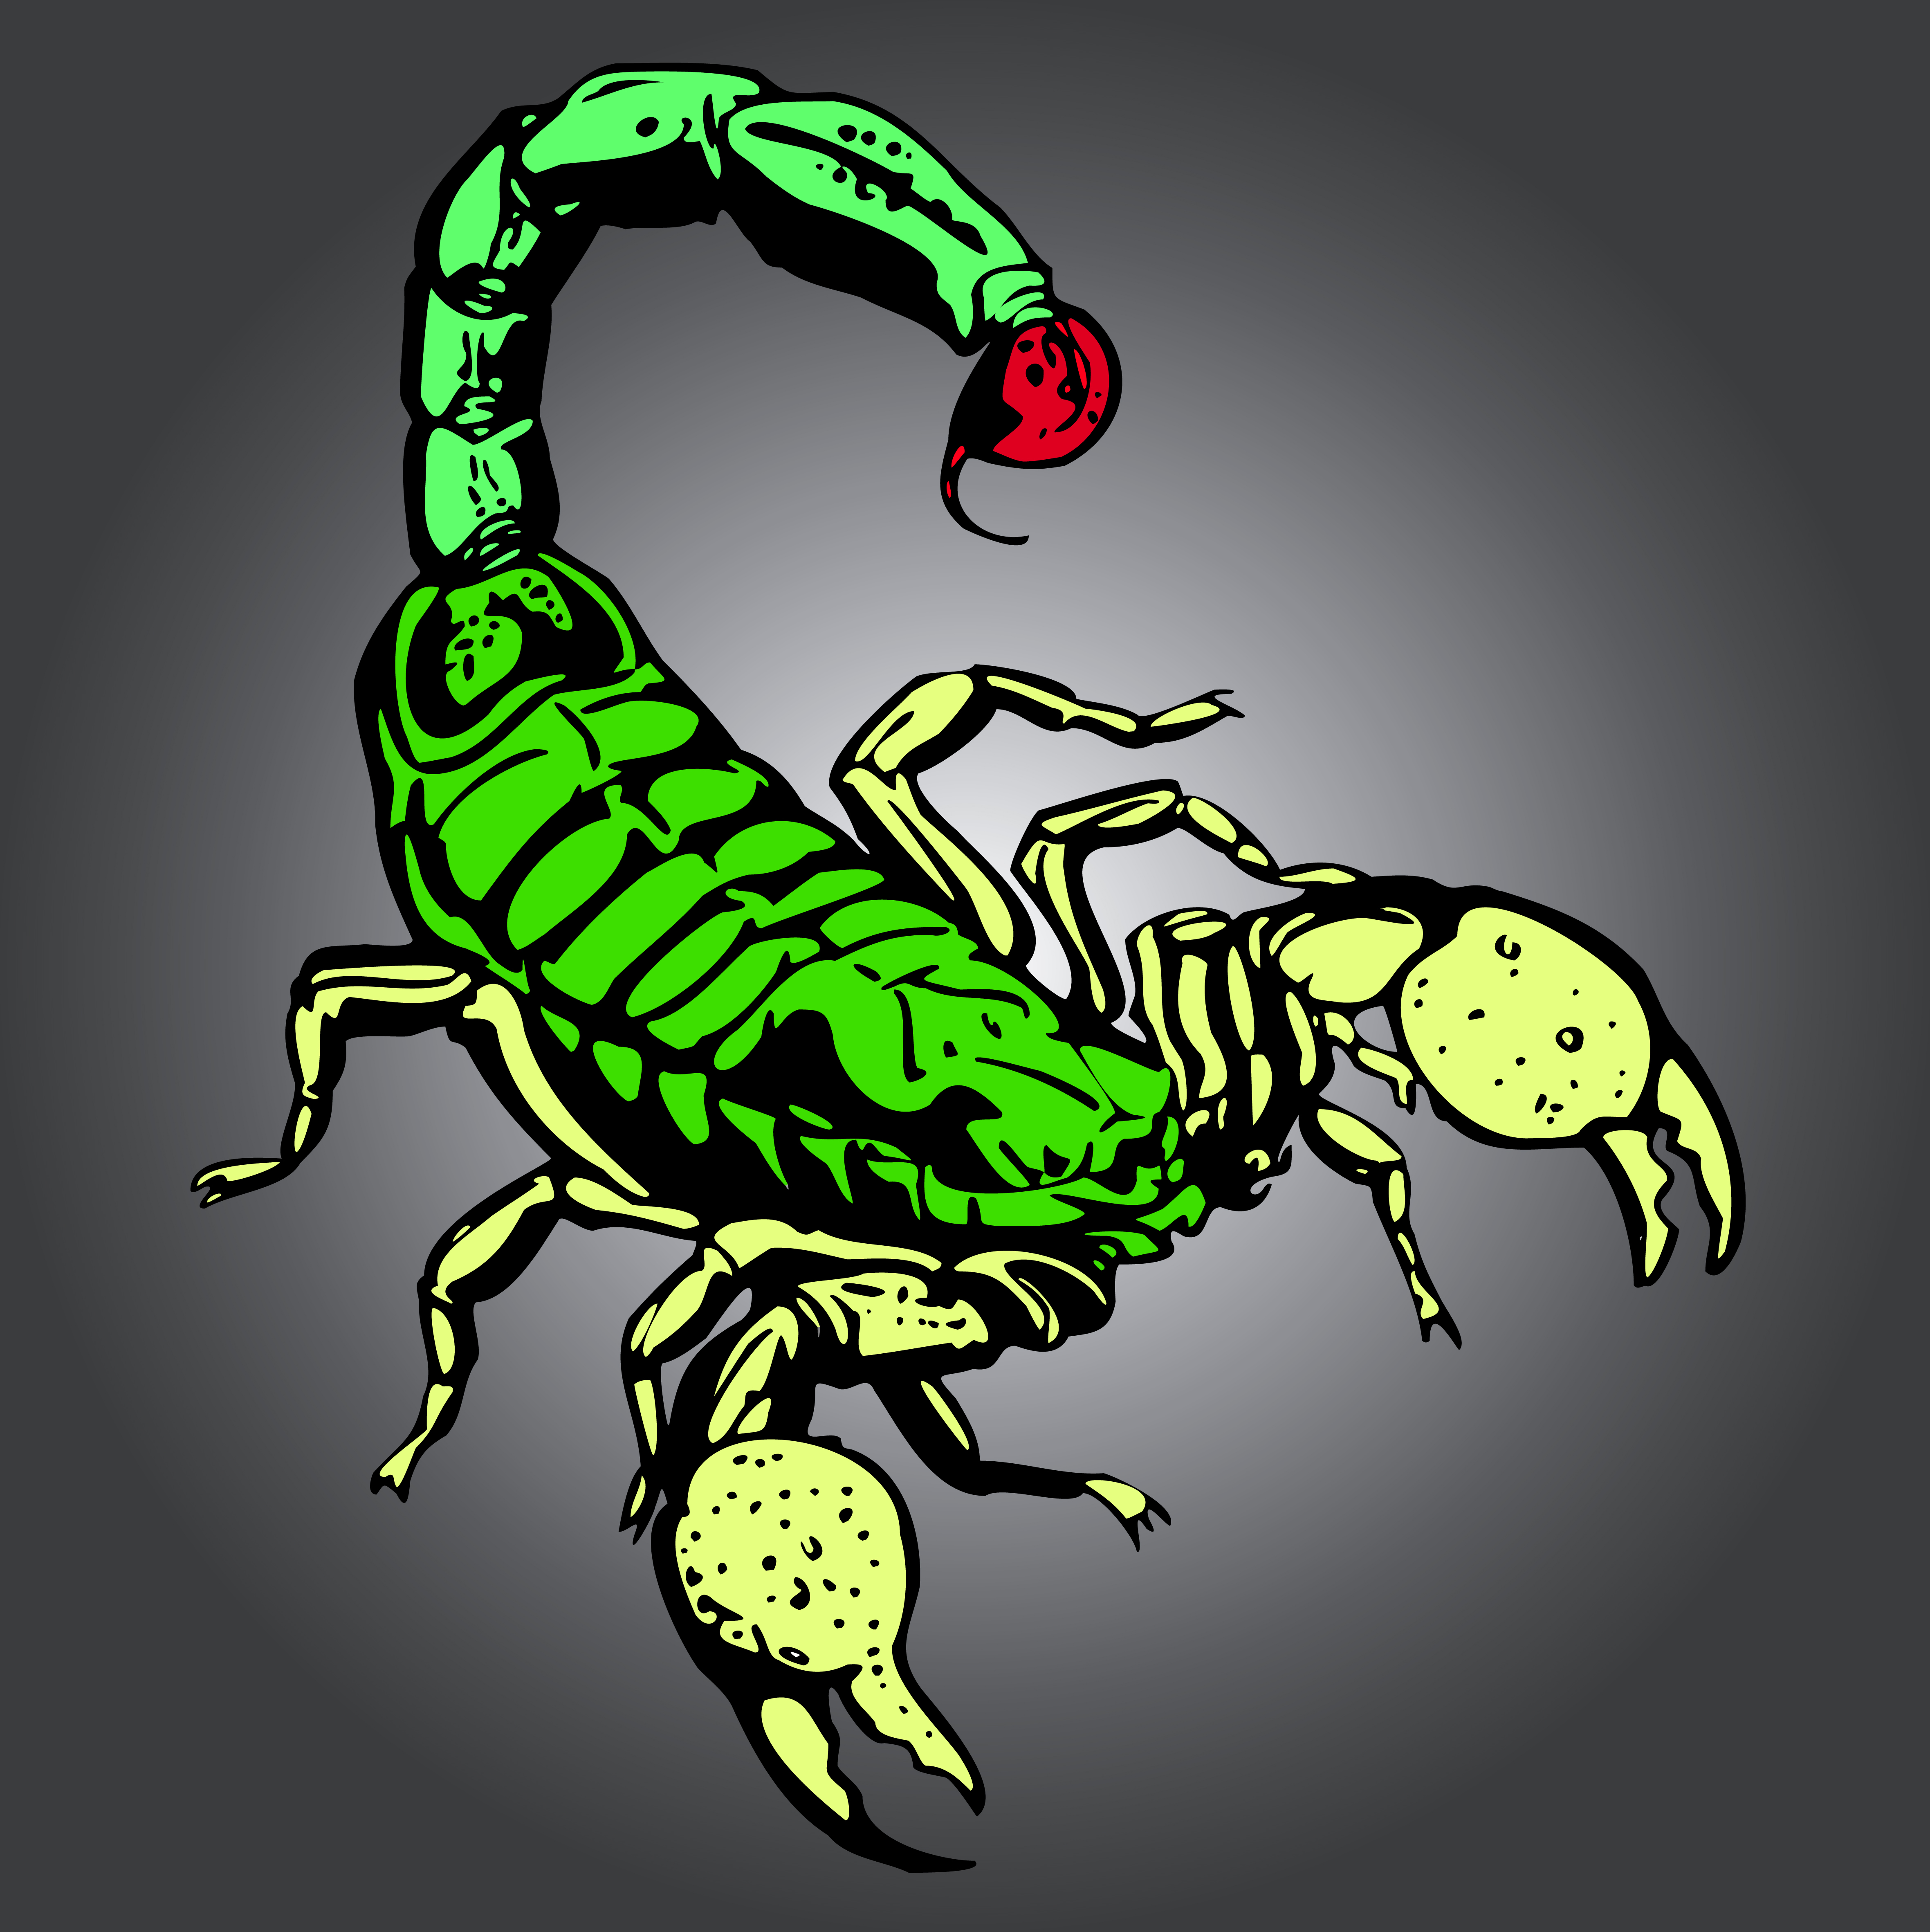 Скорпион картинка. Зеленый Скорпион. Изображение скорпиона. Скорпион весёлый. Злой Скорпион.